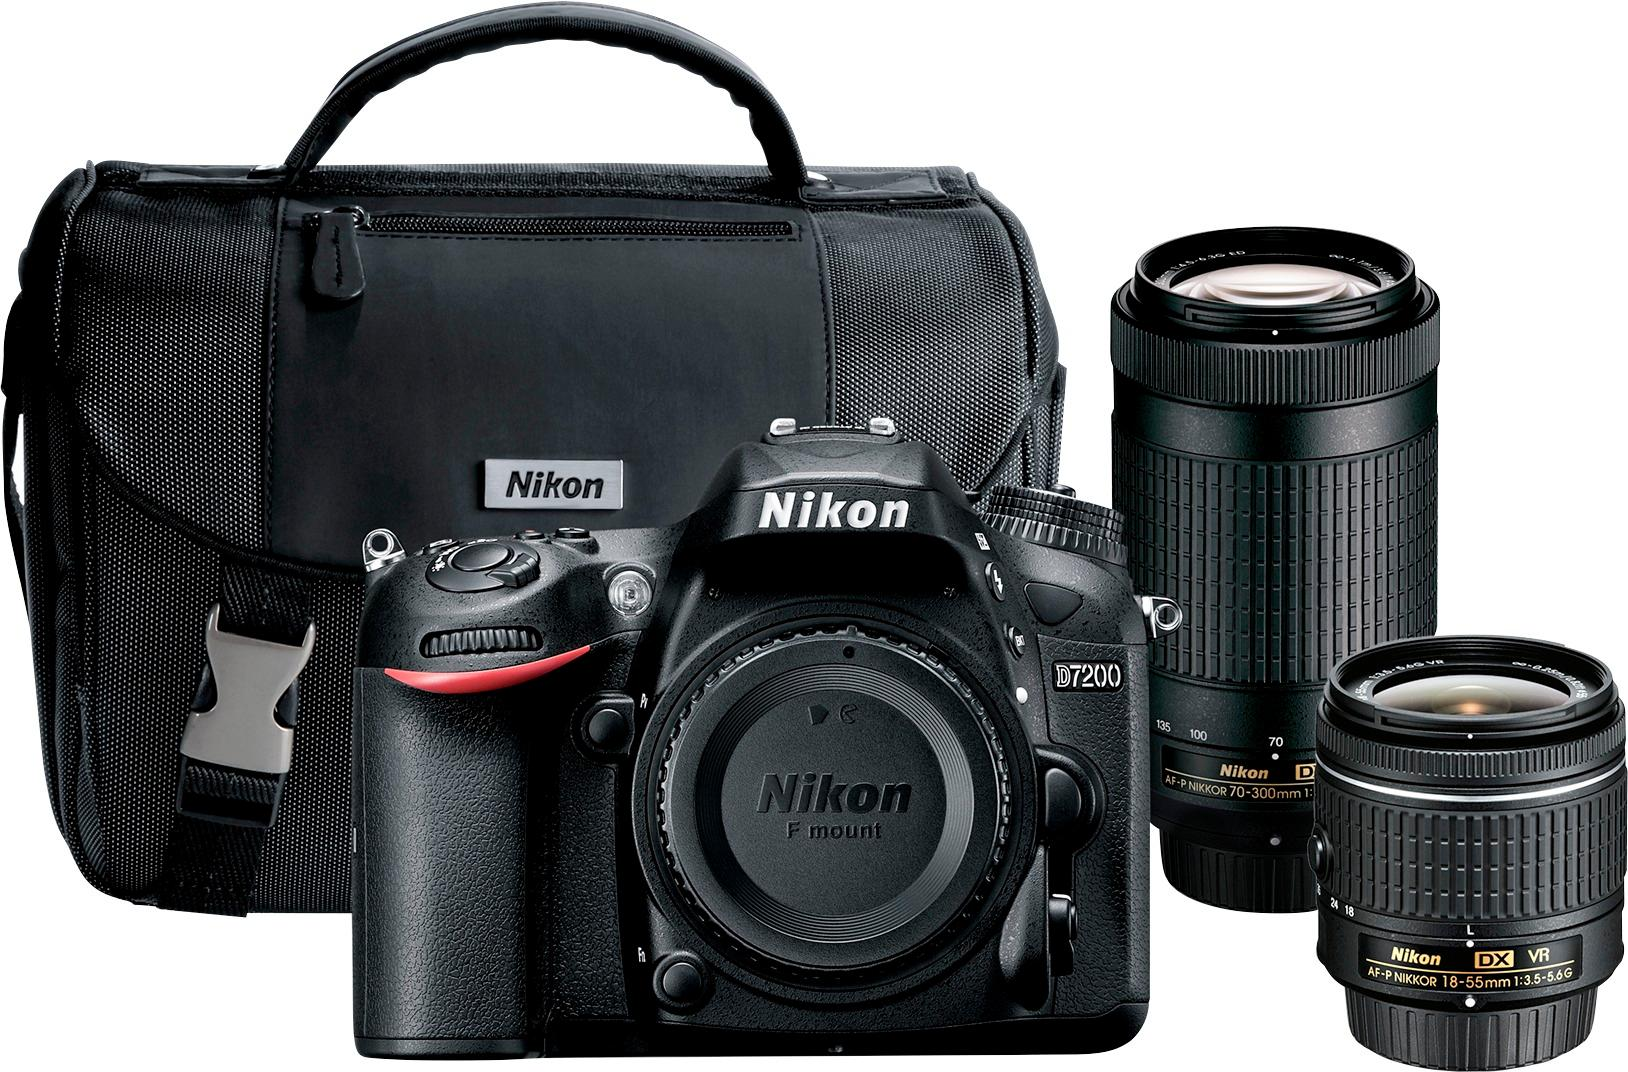 Nikon D7200 DSLR Camera with 18-55mm and 70-300mm Lenses Kit